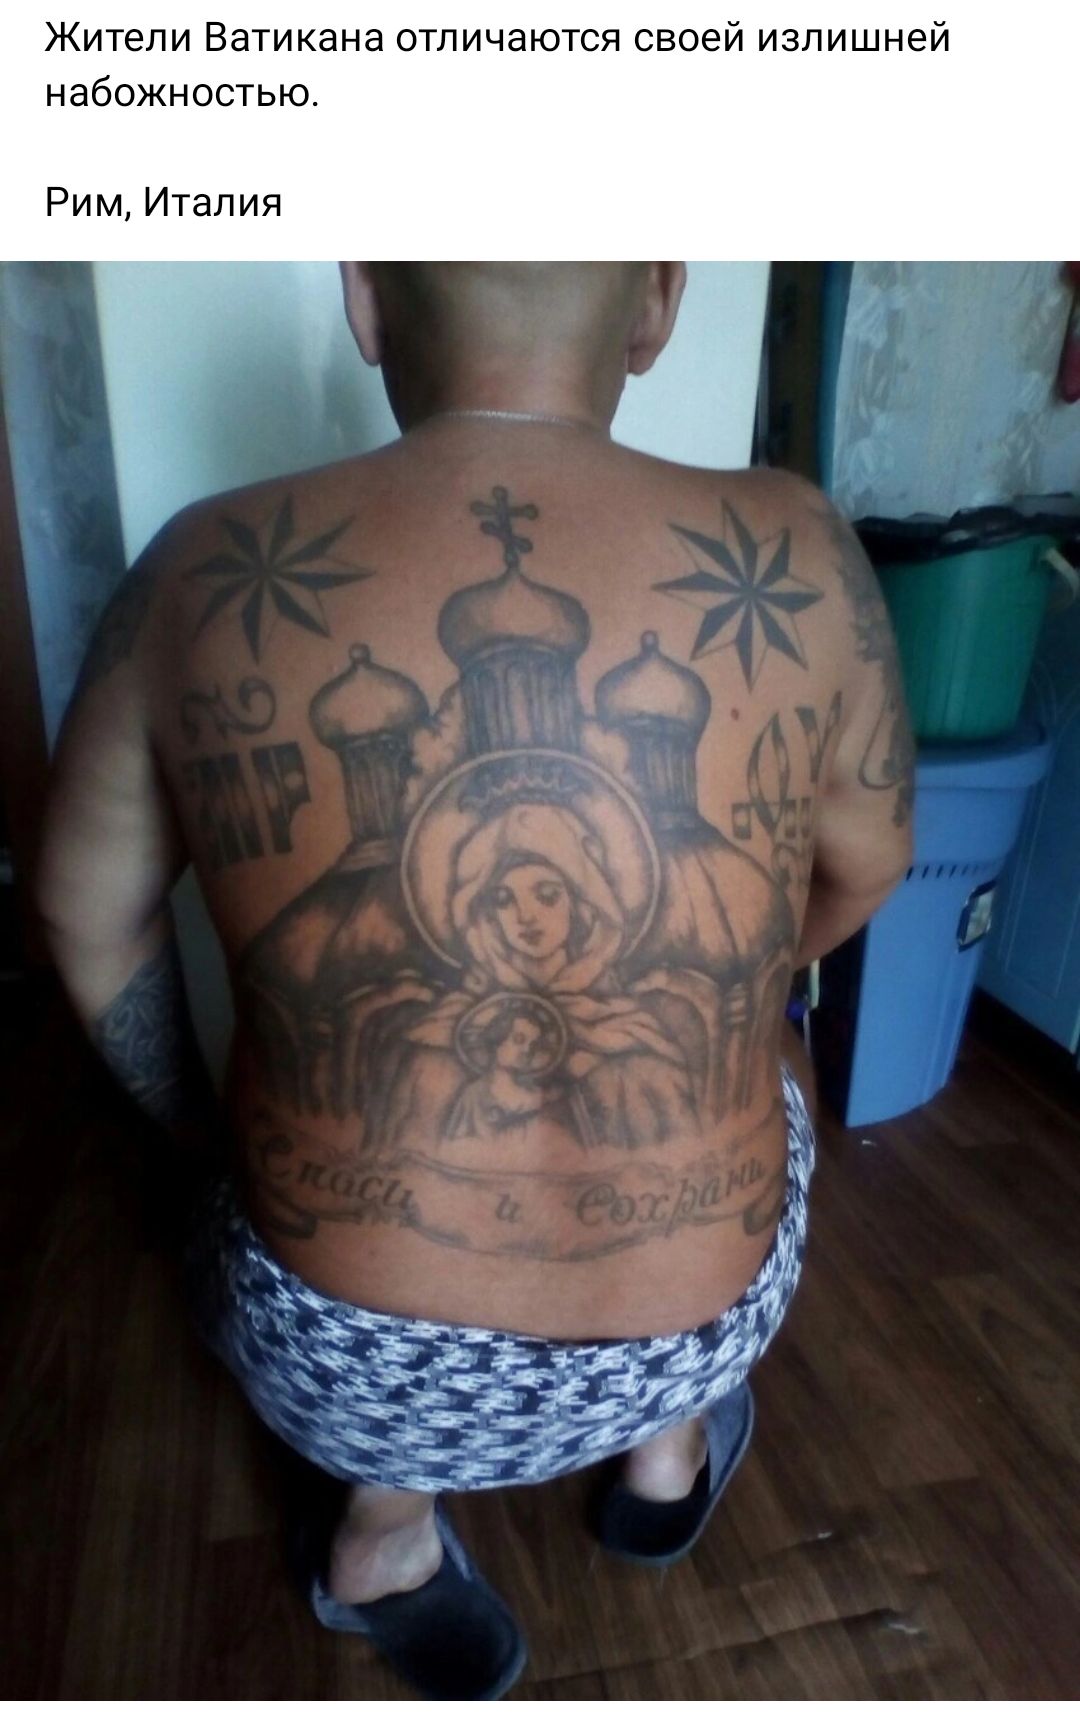 татуировка купола на спине